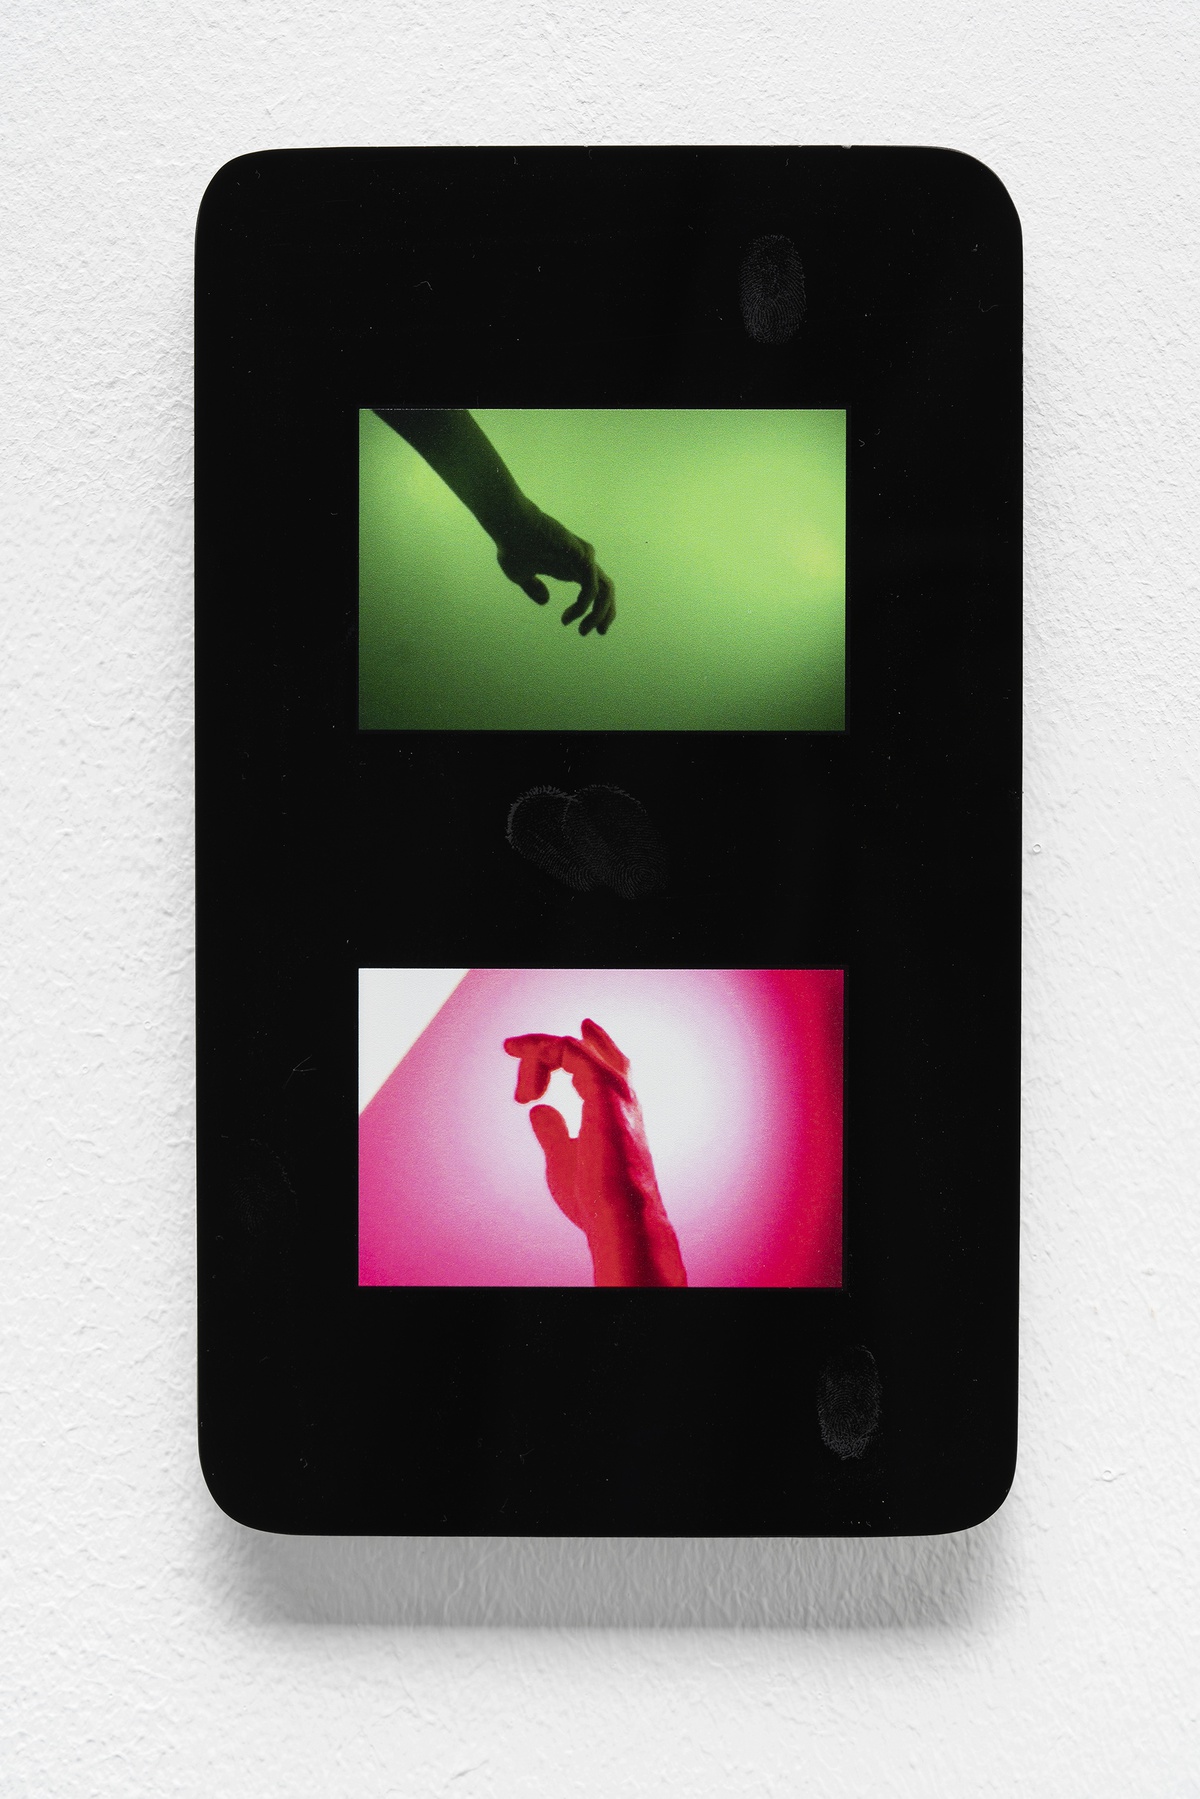 Jenna Bliss, Friendship #2plexiglass, UV print of iSight, webcam photo, acrylic paint12.7 × 21.6 × 0.95 cm